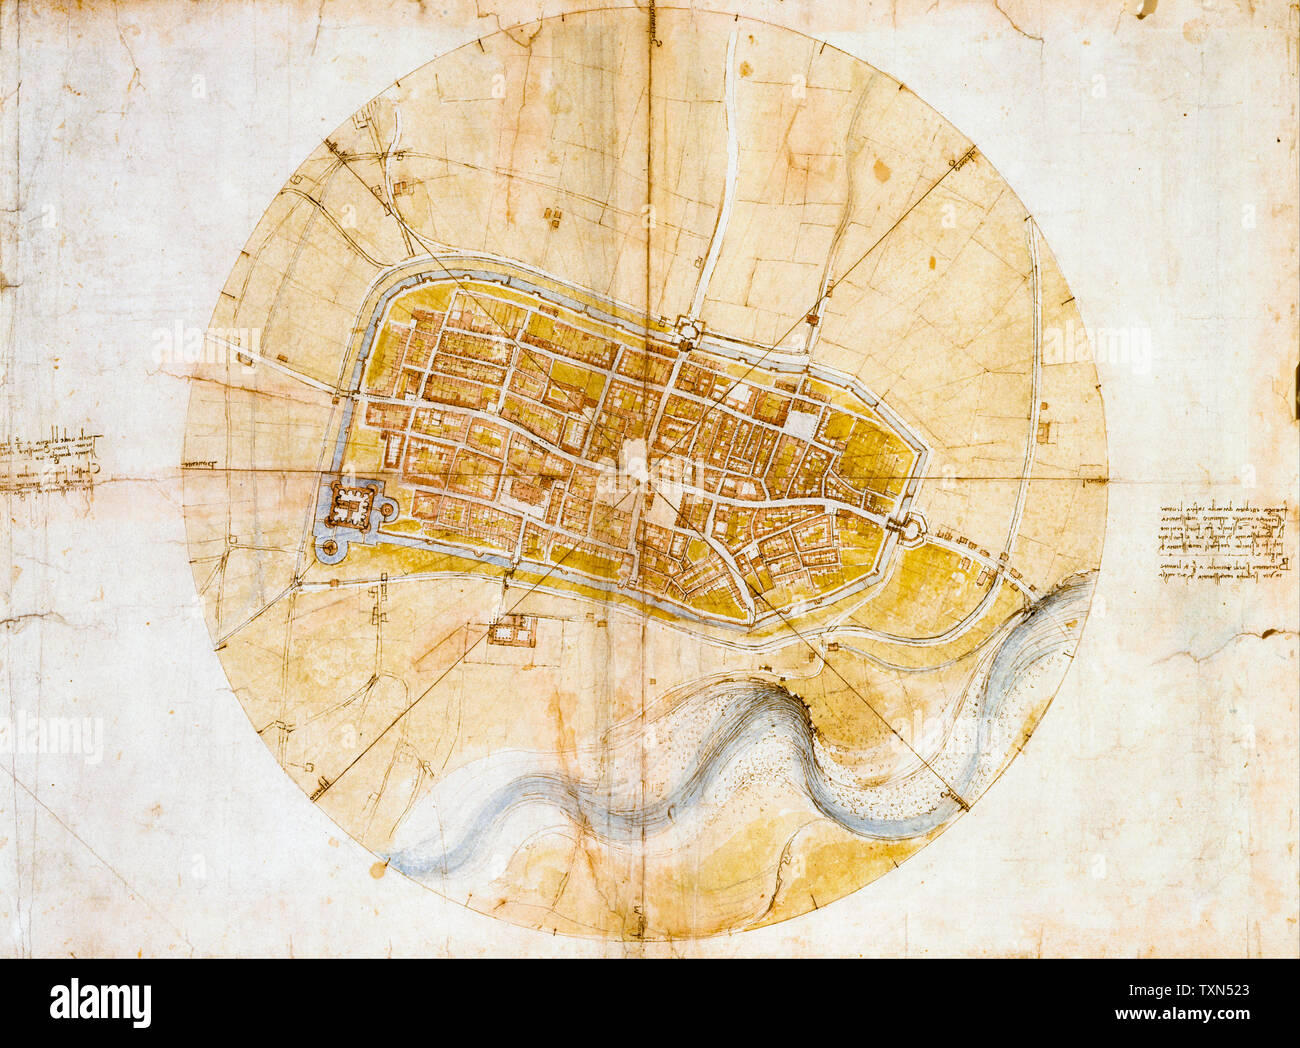 Leonardo Da Vinci, Map of imola, drawing, 1502 Stock Photo